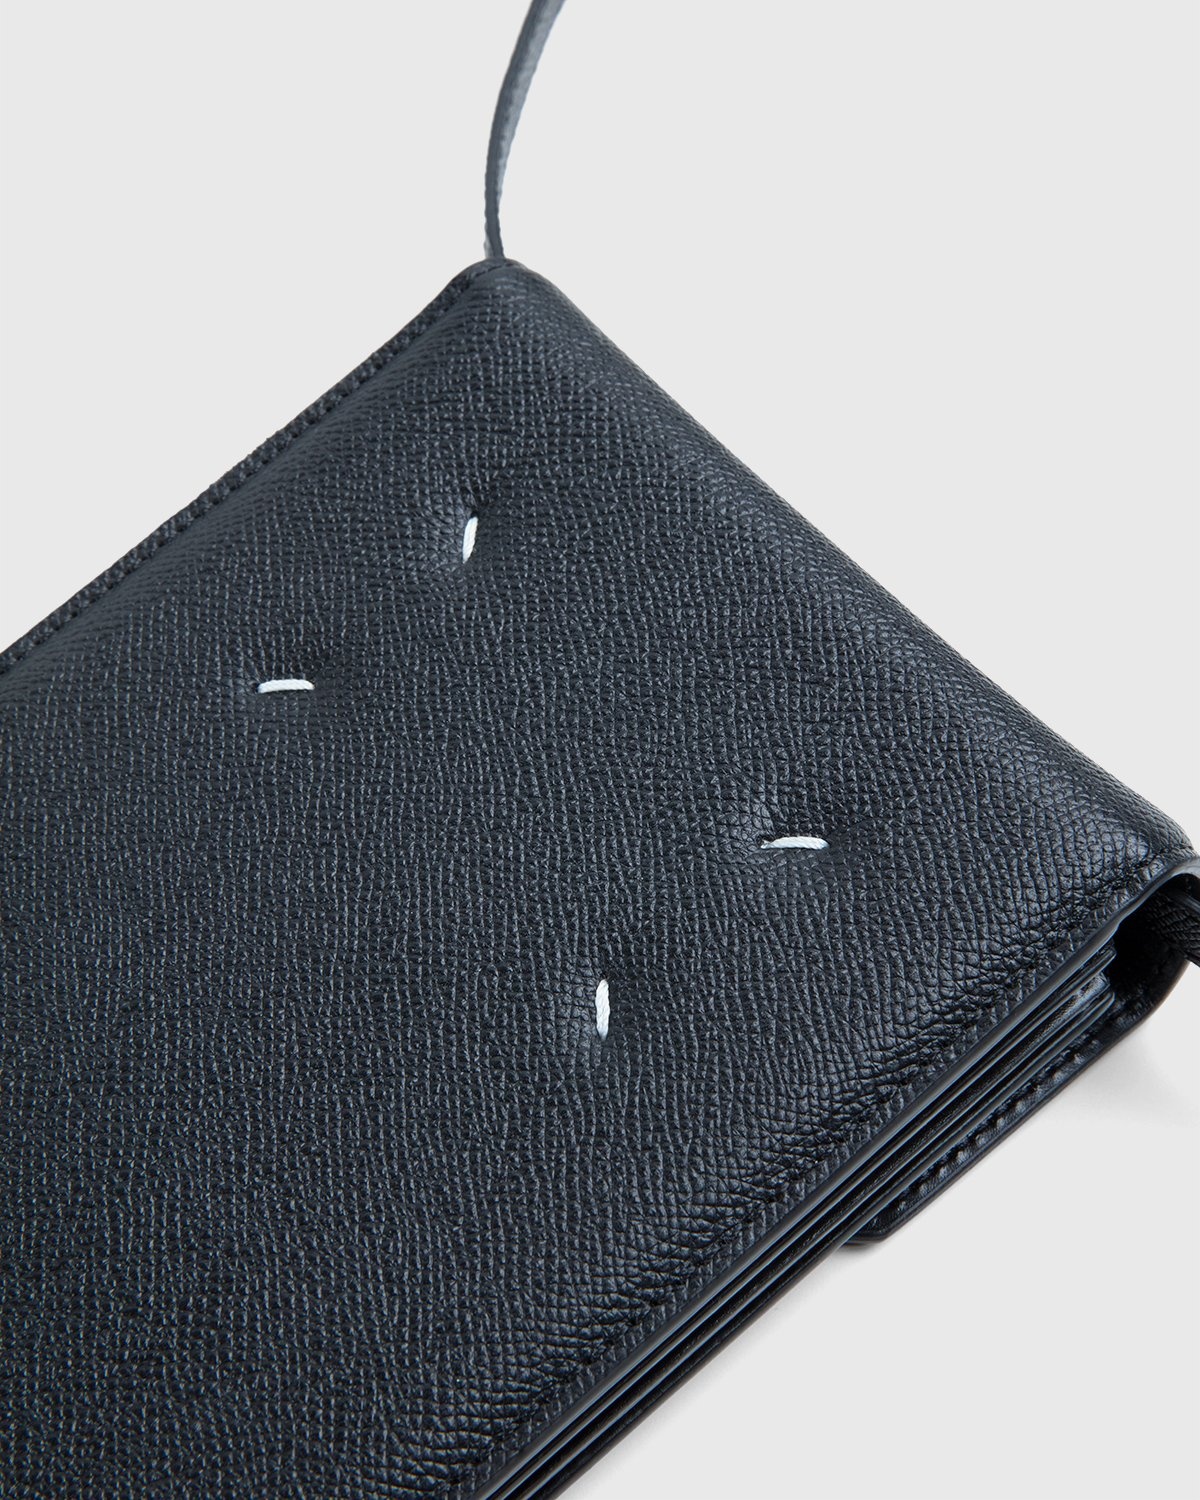 Maison Margiela – Small Leather Chest Pack Black - Bags - Black - Image 4